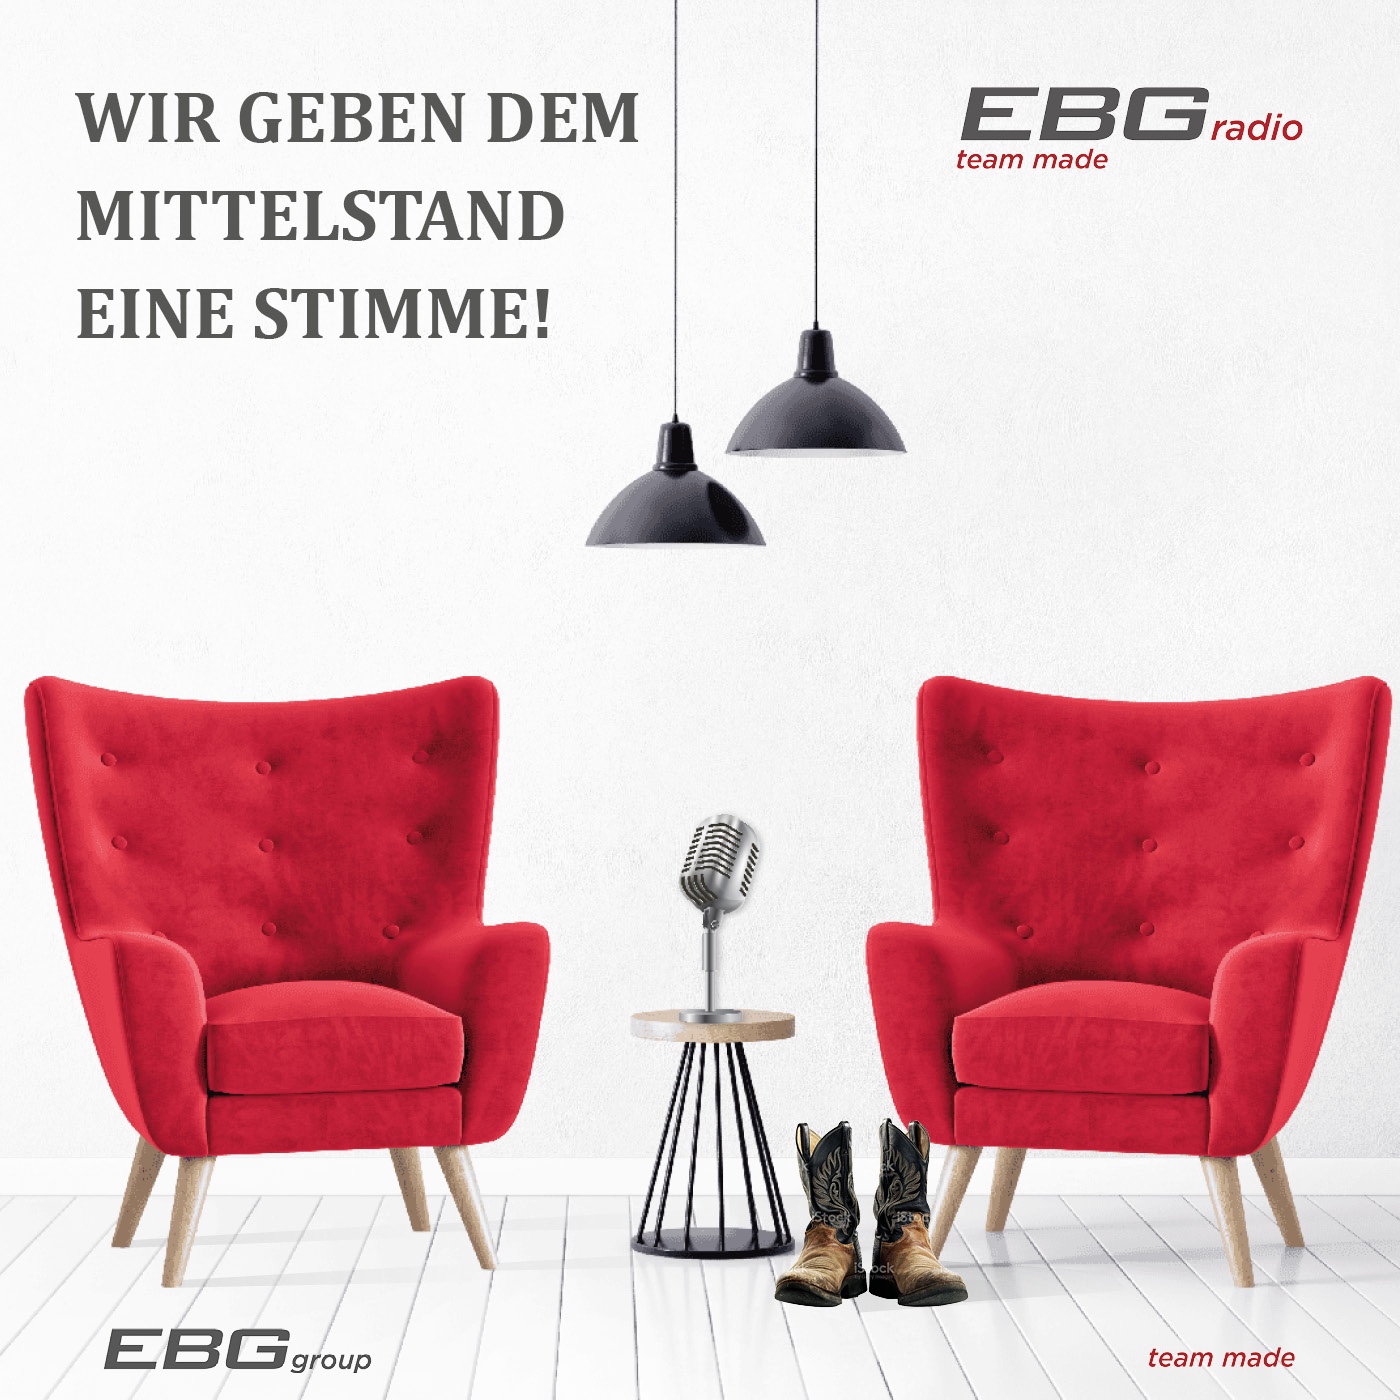 EBG radio